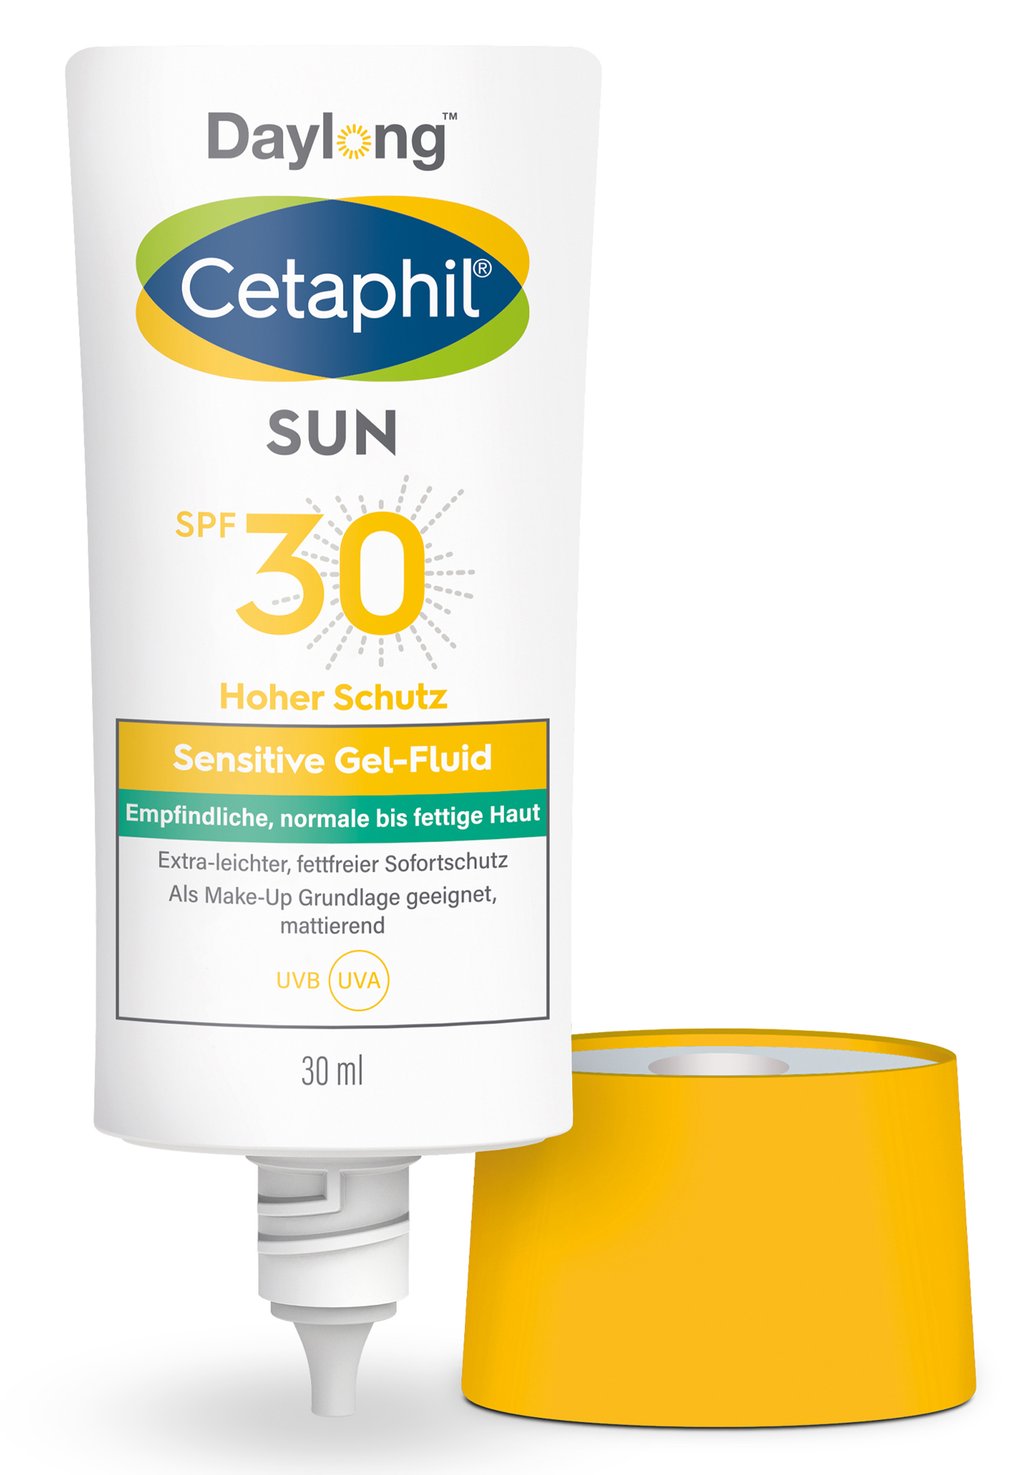 Защита от солнца SPF30 SENS GEL-FLUID GESICHT Cetaphil Sun Daylong